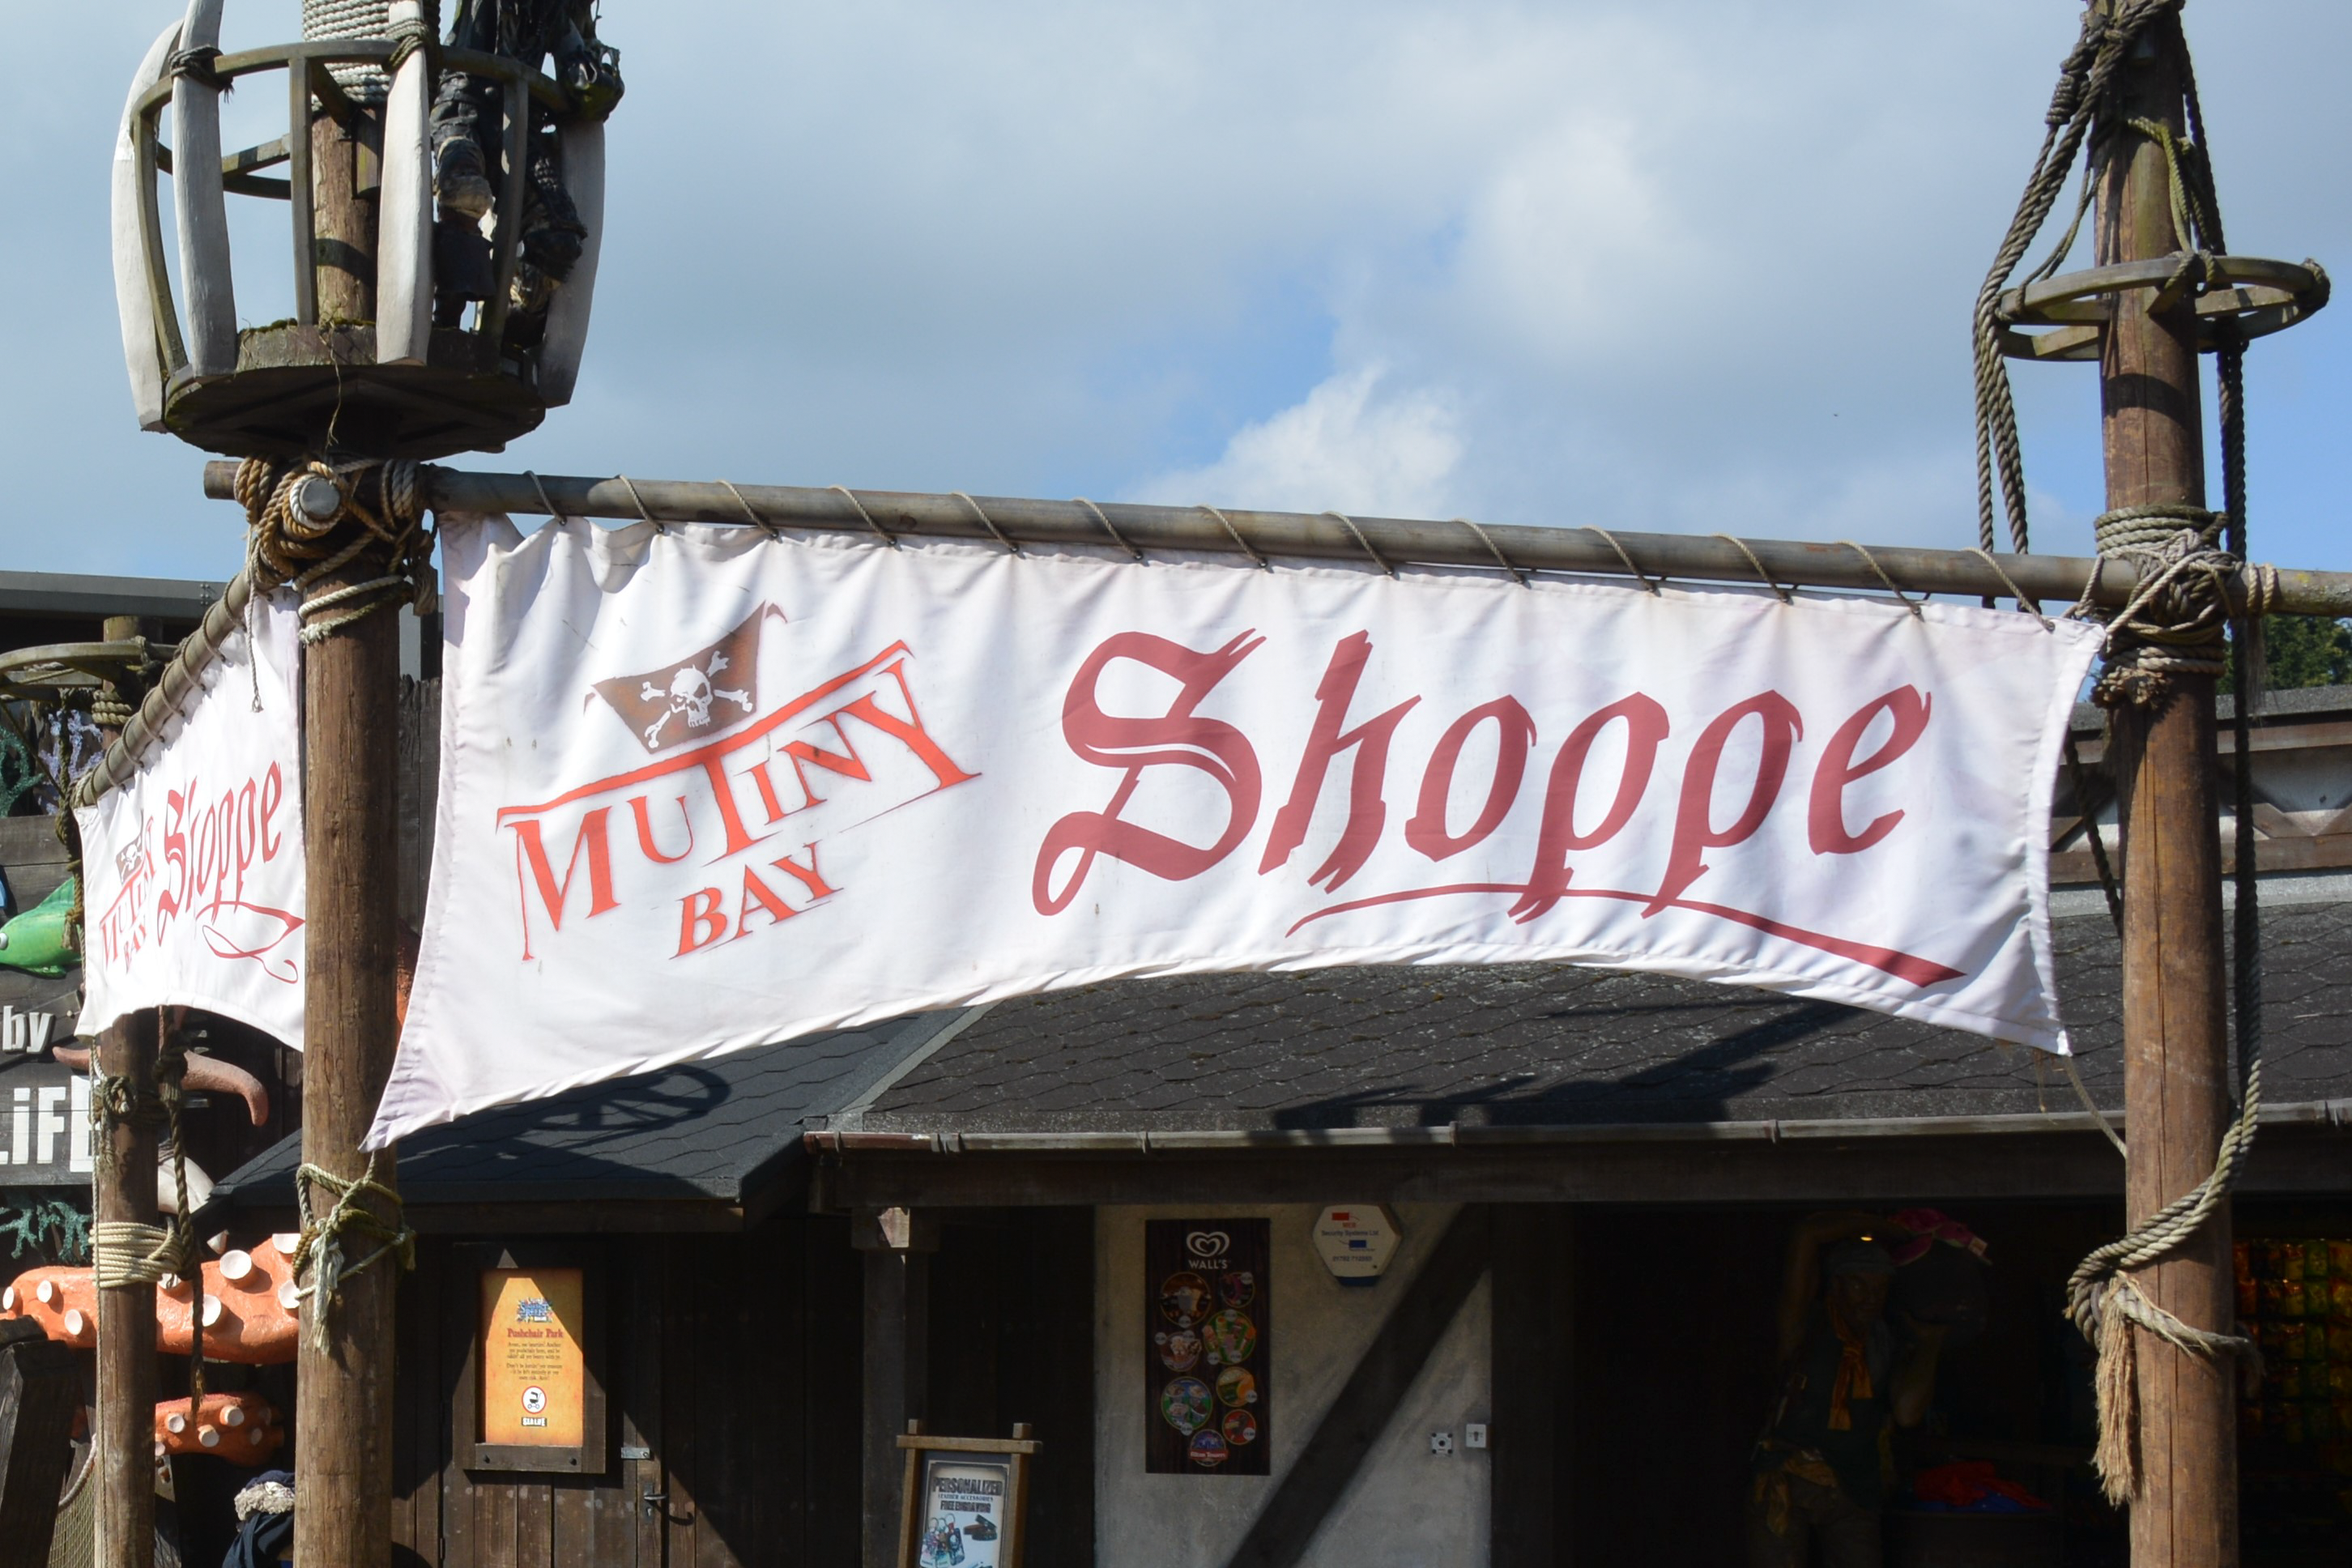 Mutiny Bay Shoppe (1)